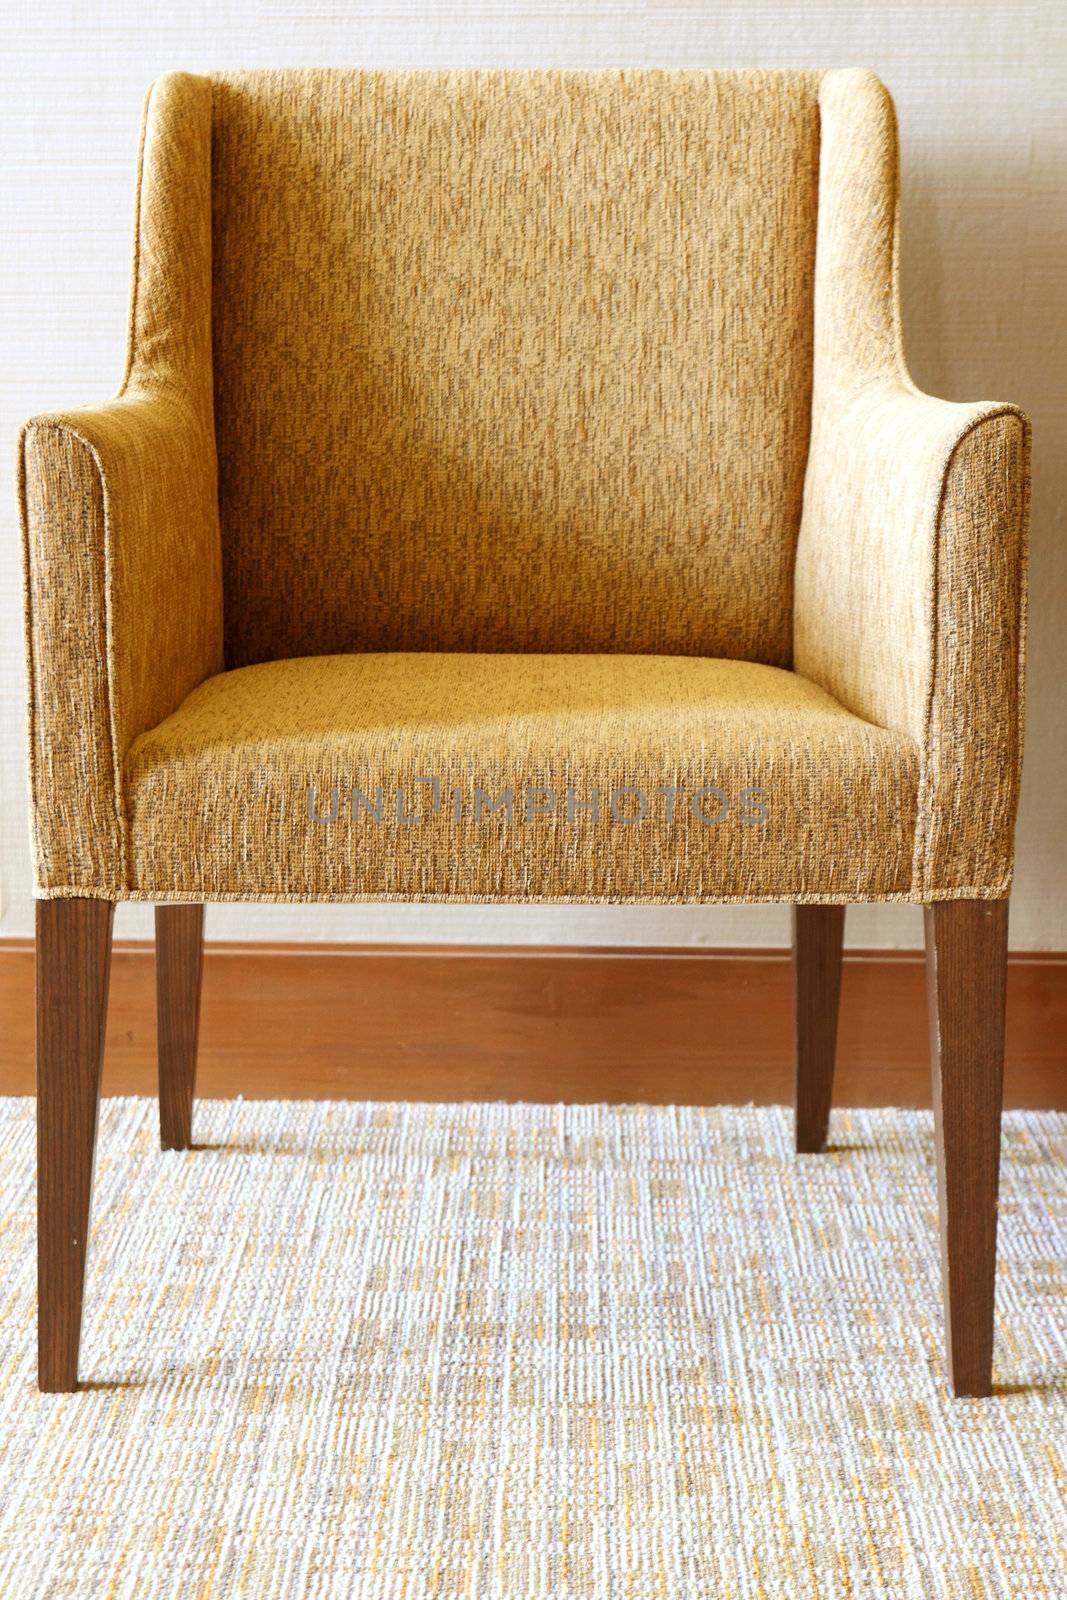 Brown modern chair in living room